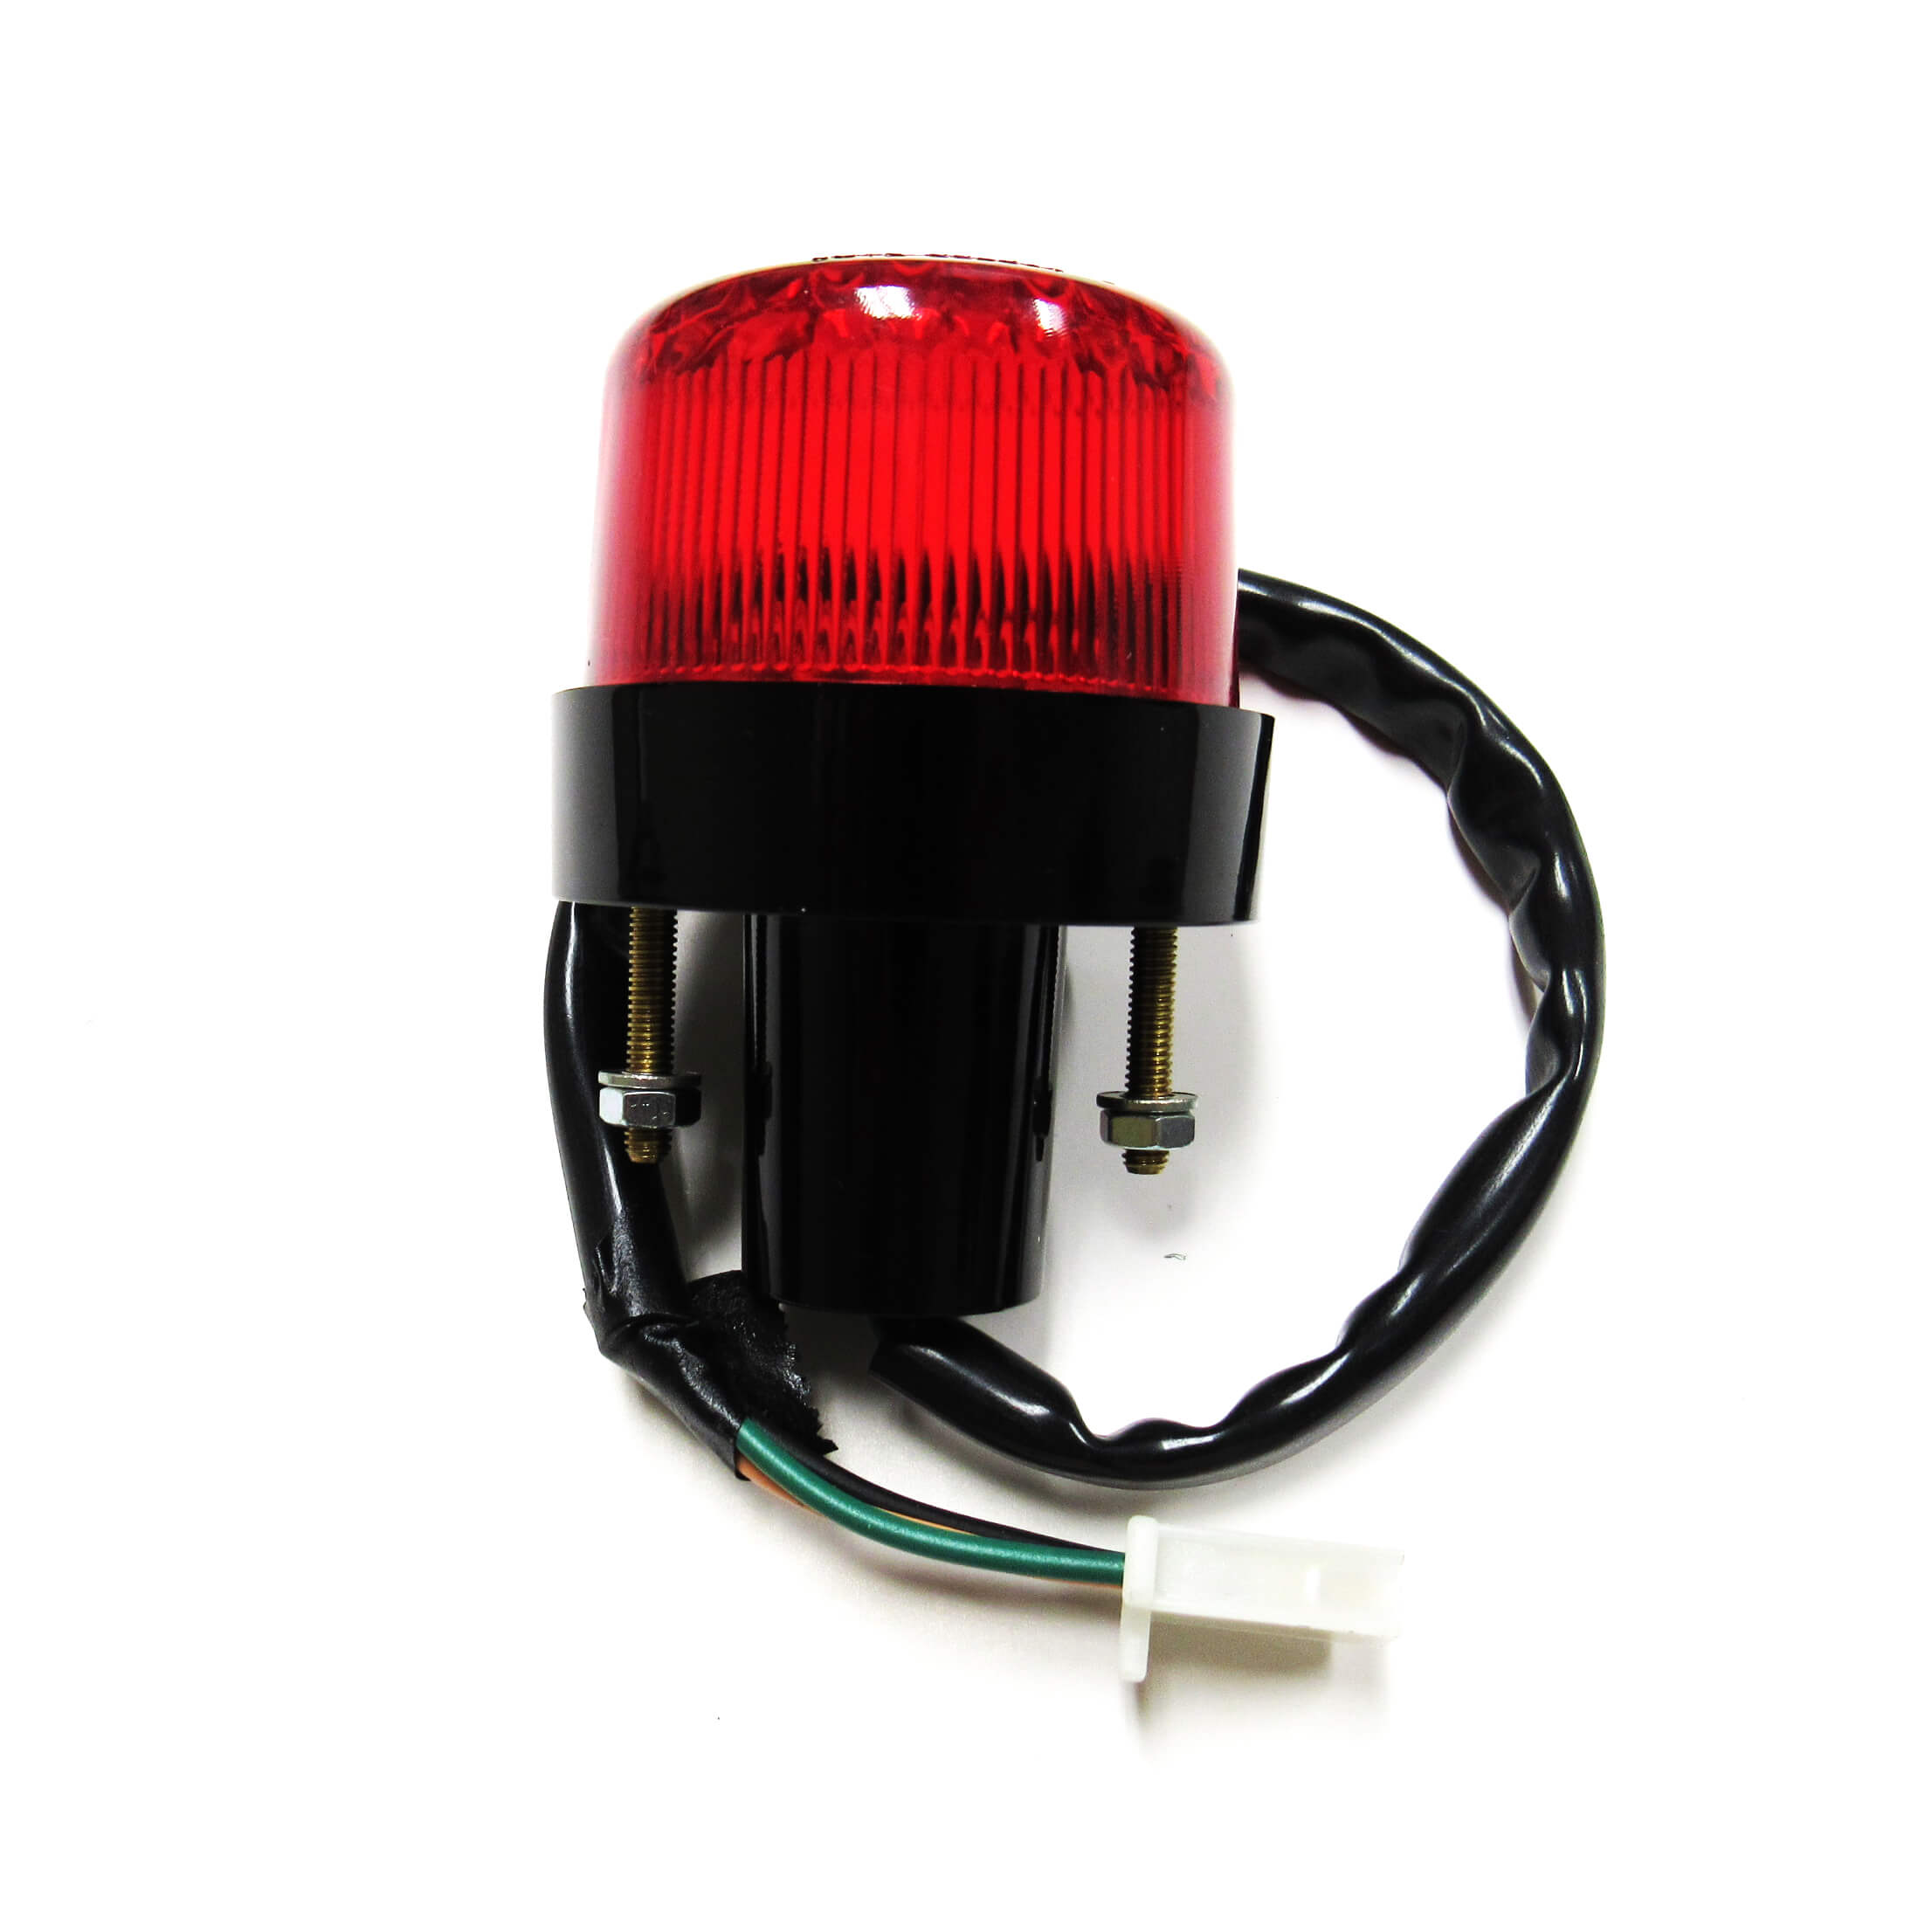 Tail Light (ATV) Fits E-Ton Viper RXL50, RXL70, RXL90R, RX4-70, RX4-90R ATVs - Click Image to Close